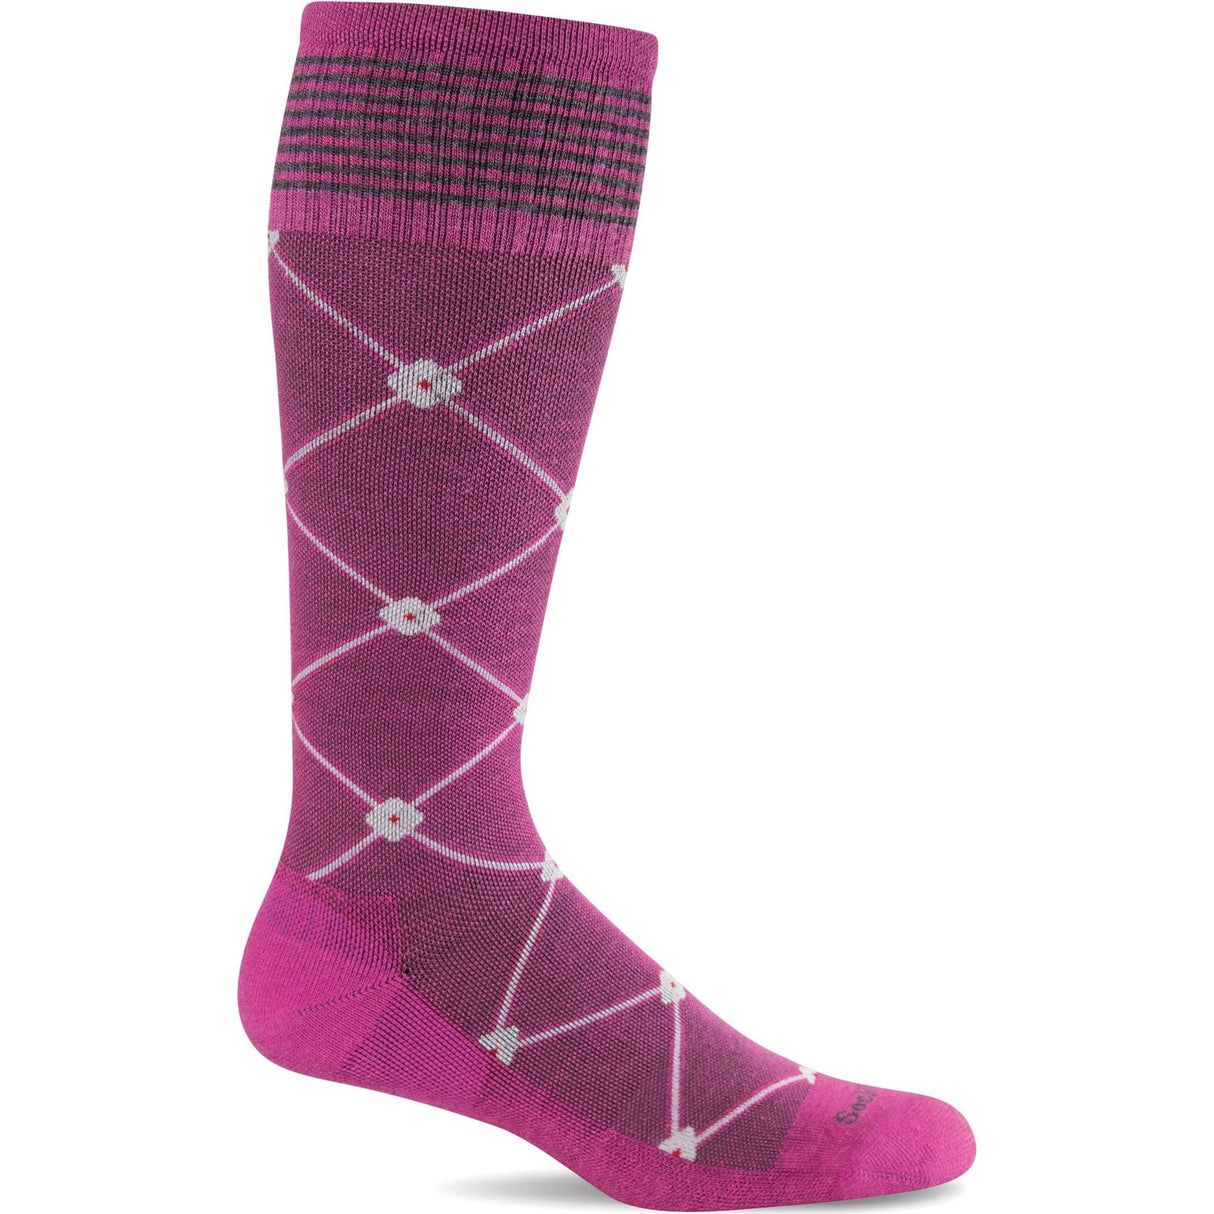 Sockwell Womens Elevation Firm Compression Knee High Socks  -  Small/Medium / Raspberry